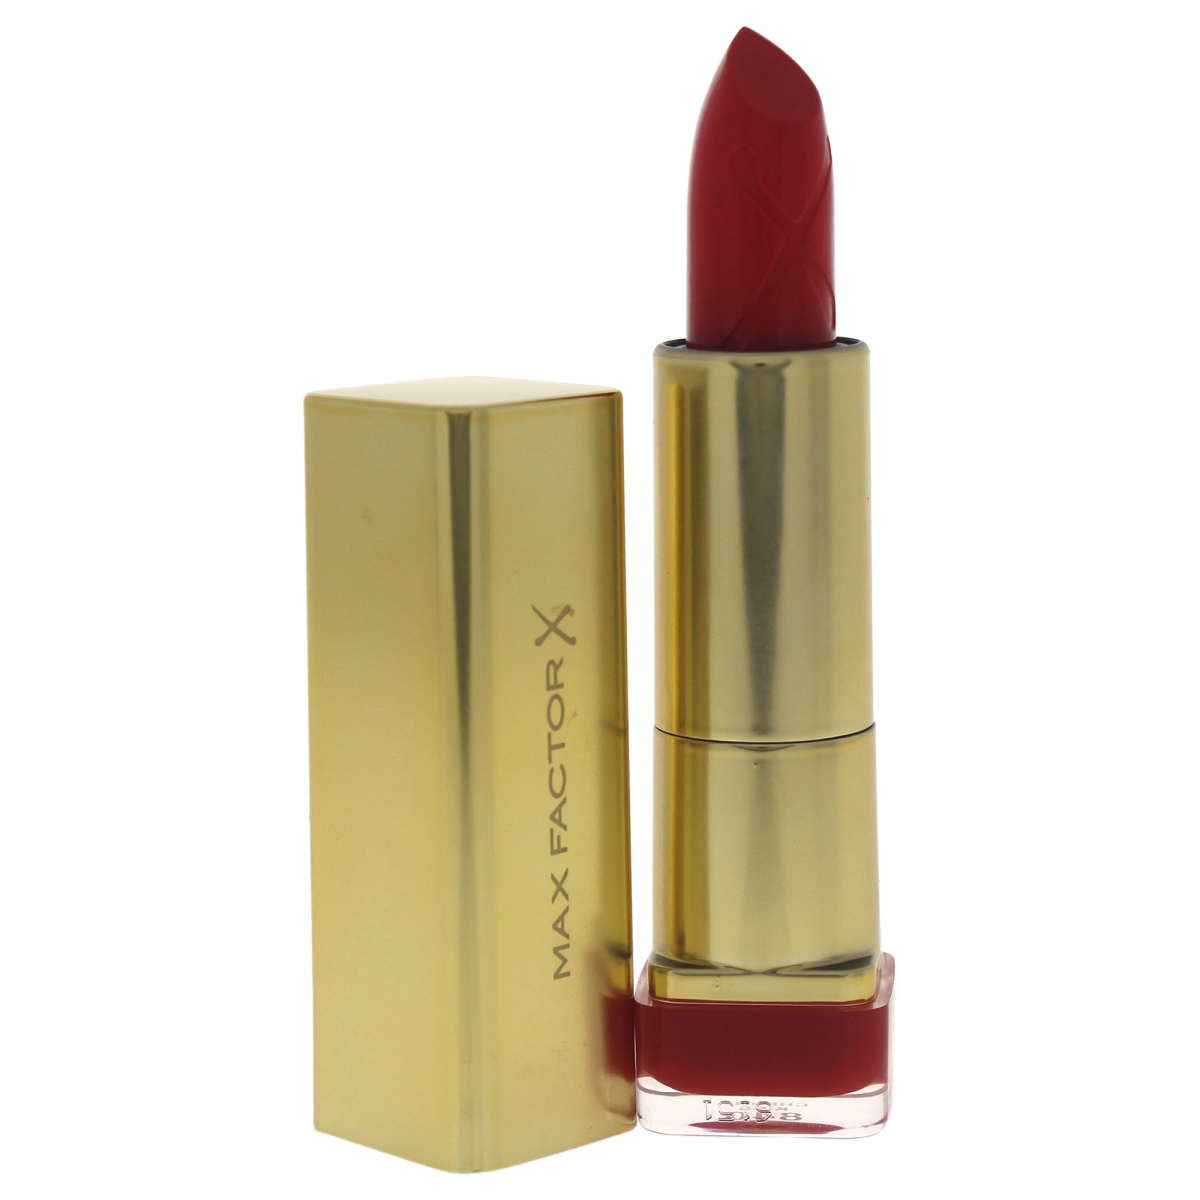 W-c-11210 0.001 Oz No. 840 Colour Elixir Cherry Kiss Lipstick For Women